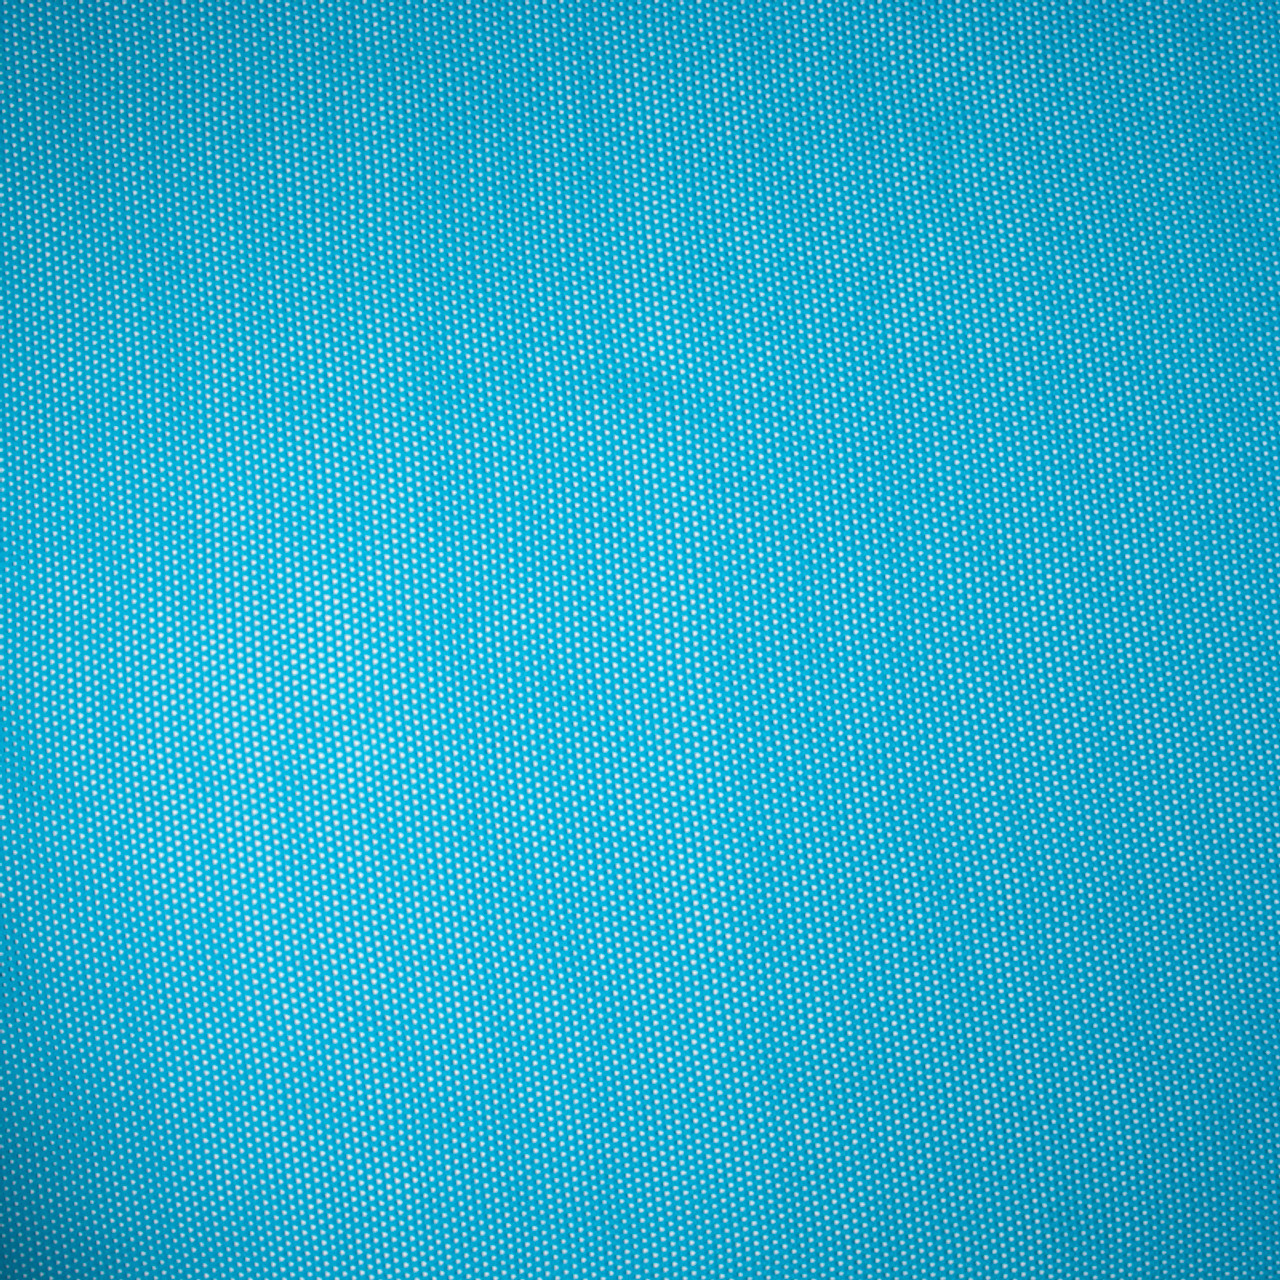 Cali Fabrics | Bright Turquoise Stretch Cotton Netting